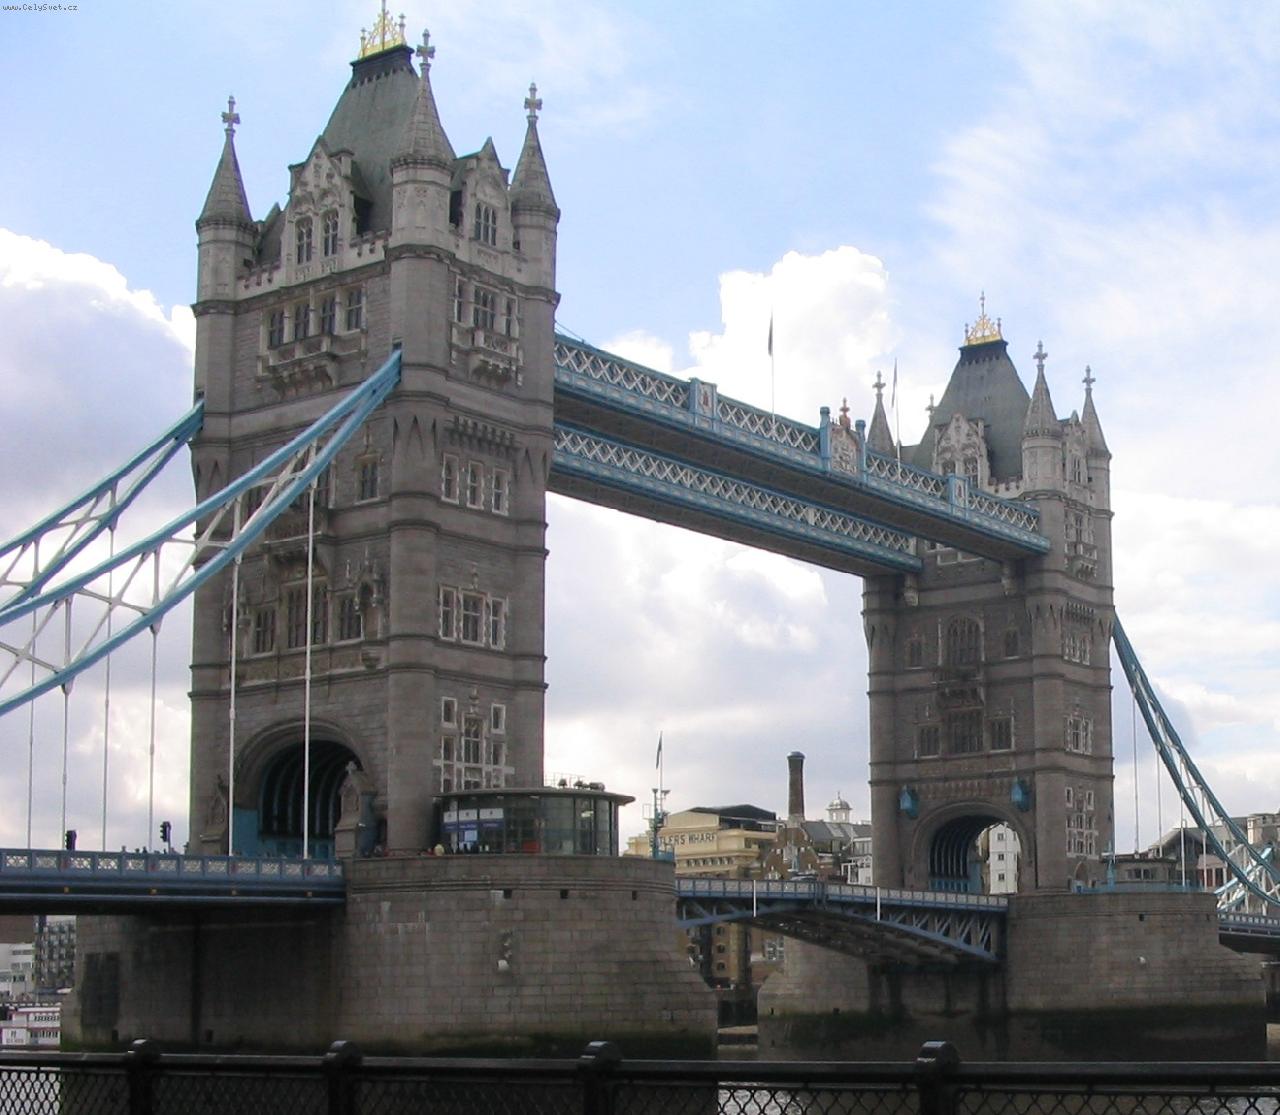 Photo: Tower Bridge